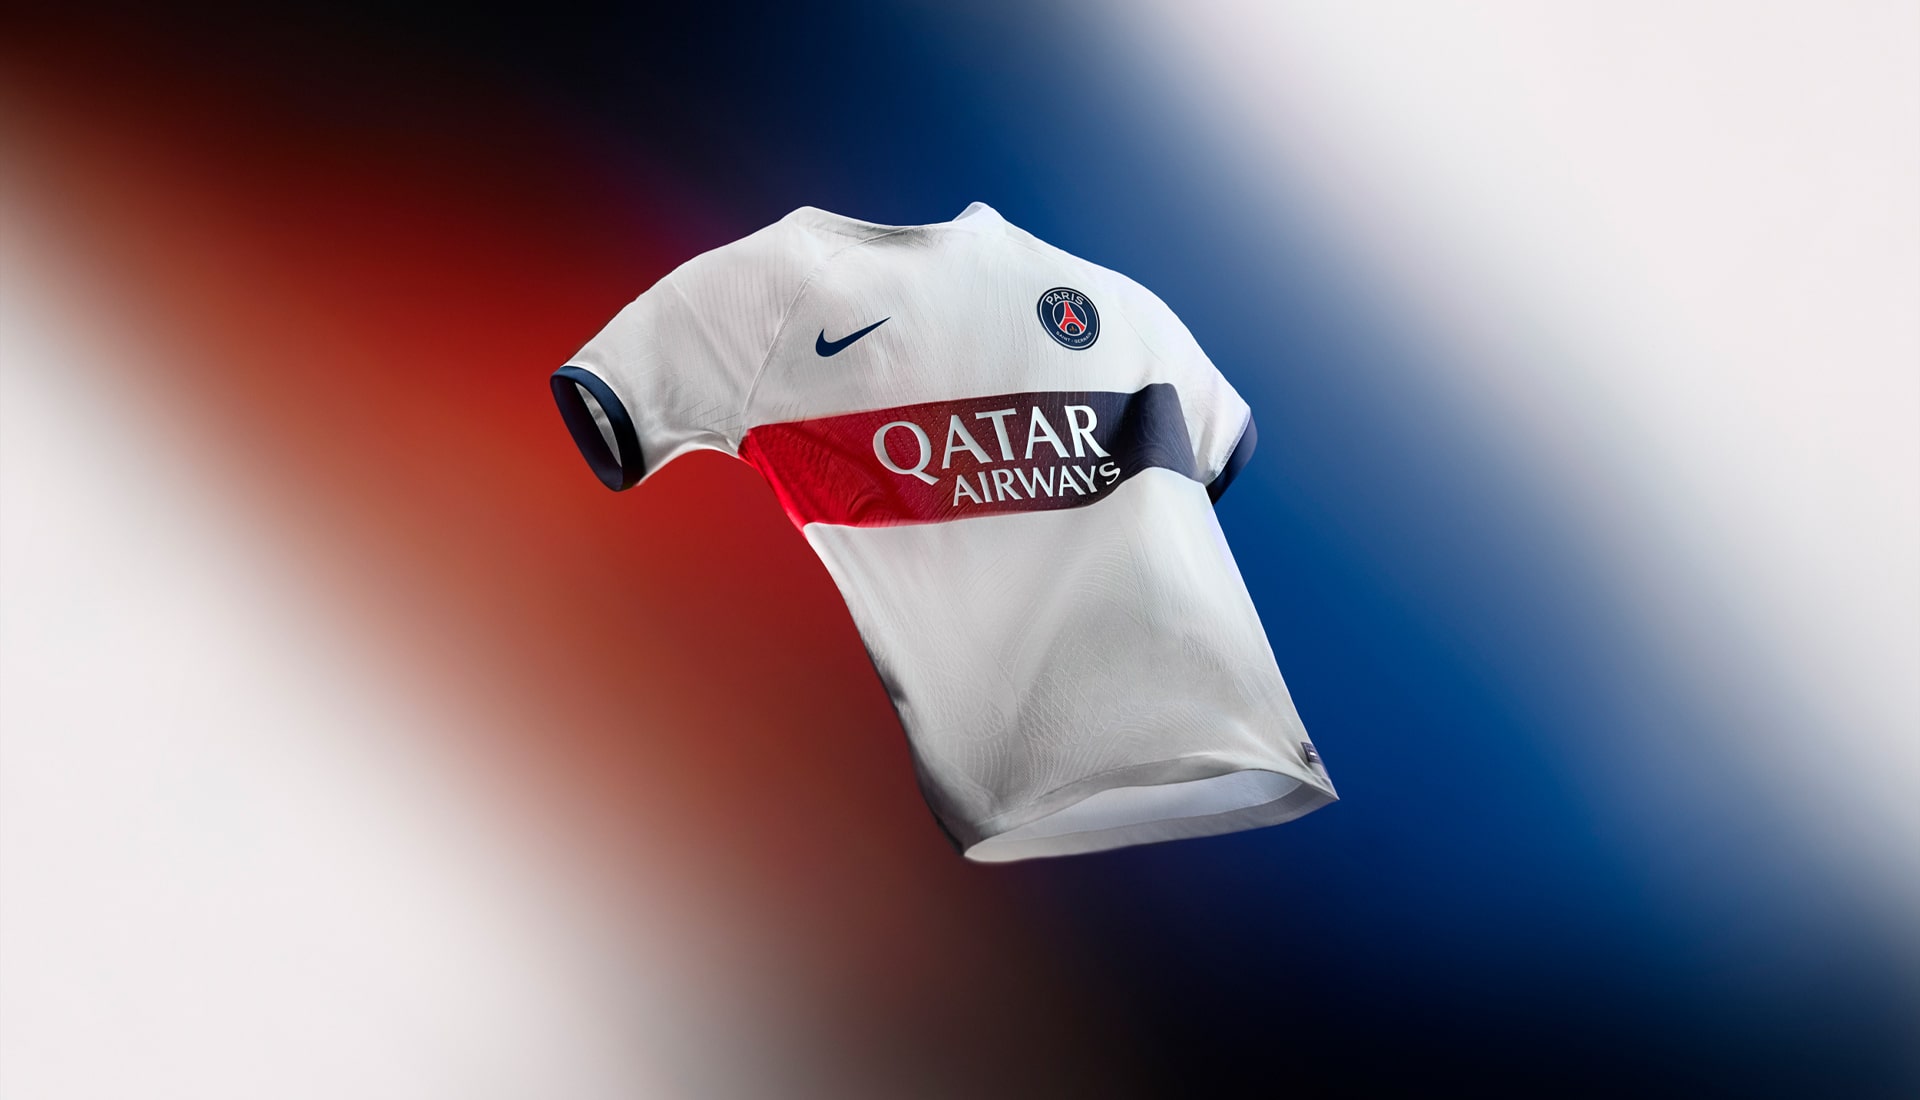 2023/24 Nike Away Kit unveiled